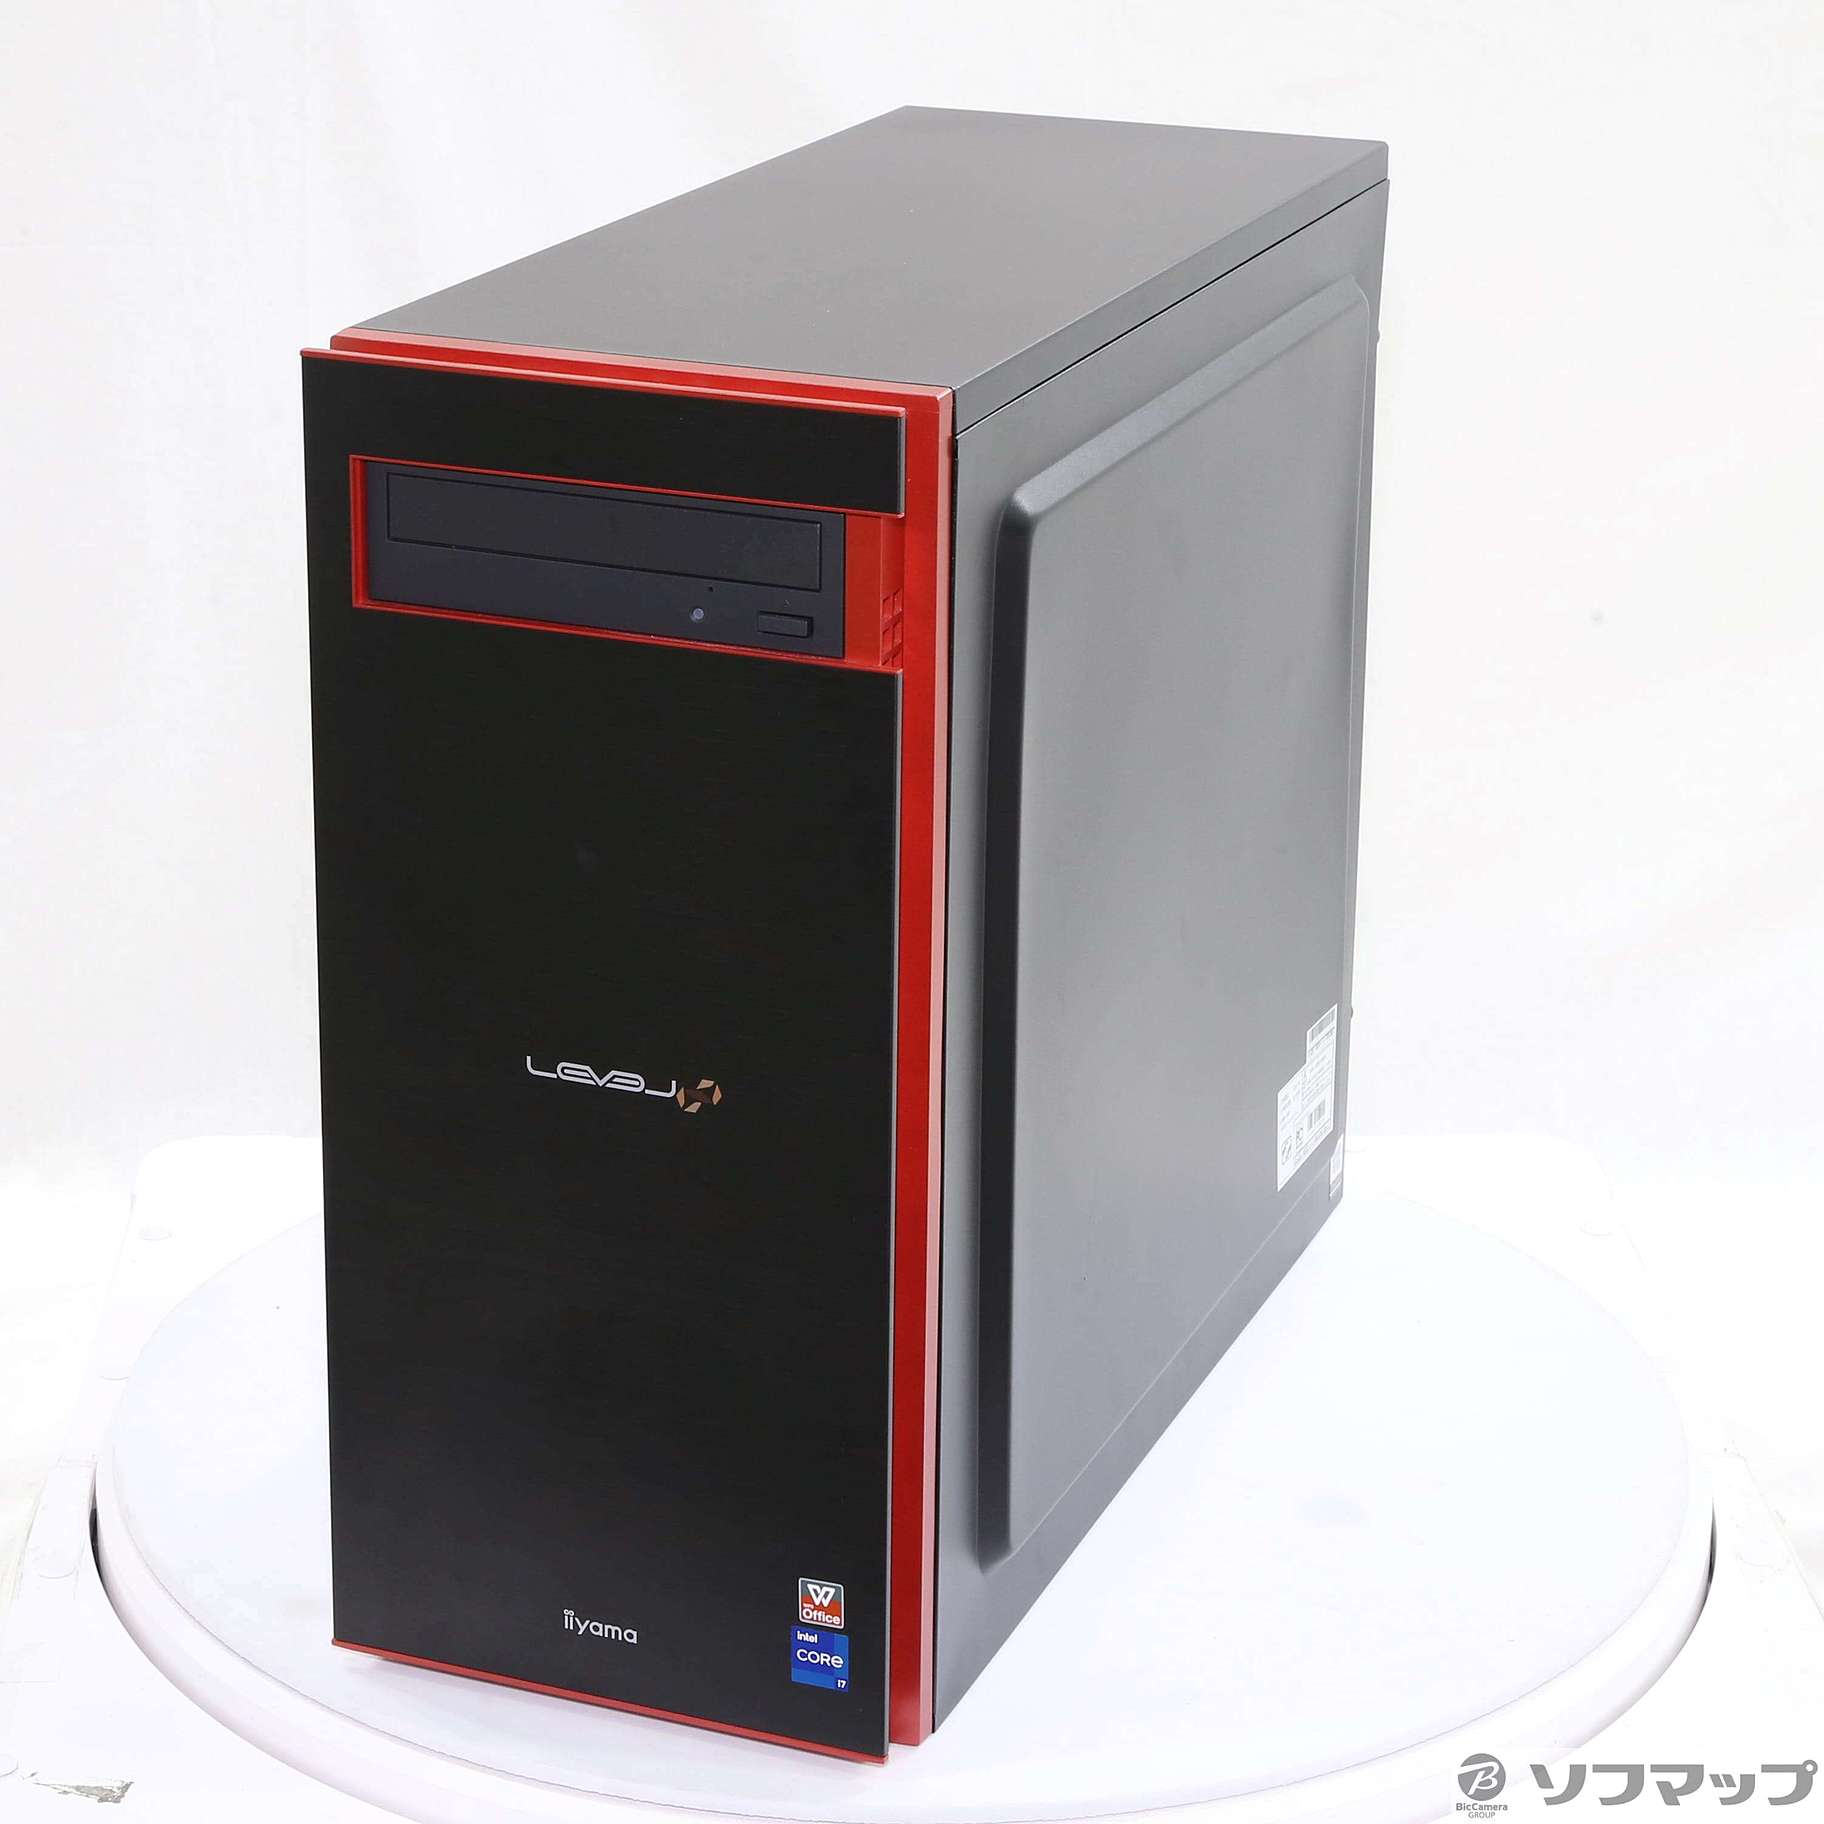 iiyama\nLEVEL-R059-117-RBSXM - デスクトップ型PC